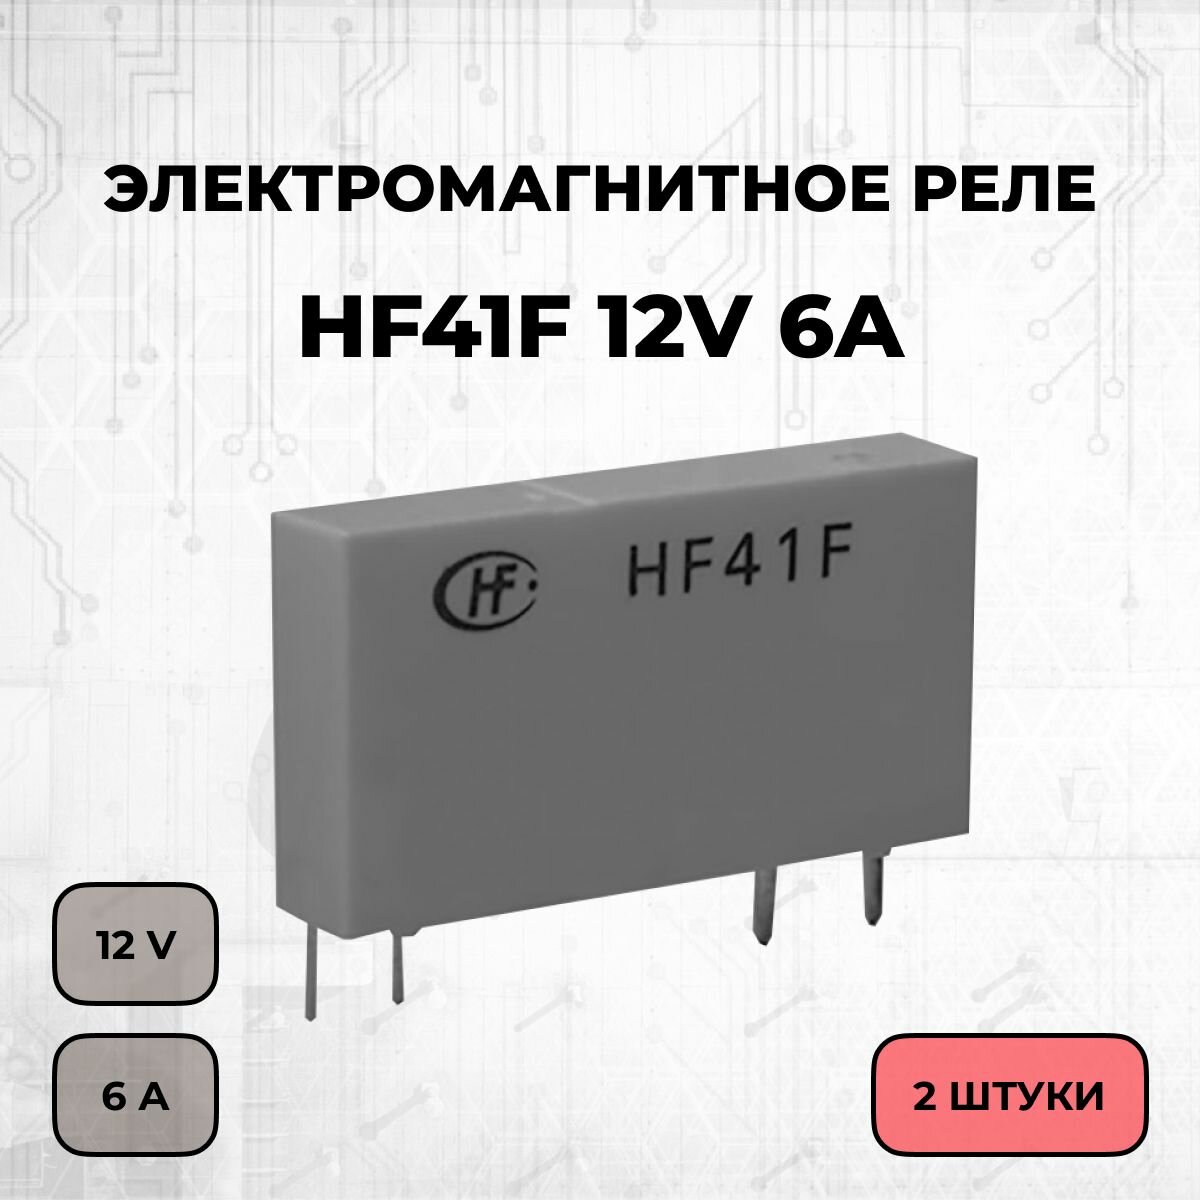 Электромагнитное реле HF41F 12V 6A - 2 шт.